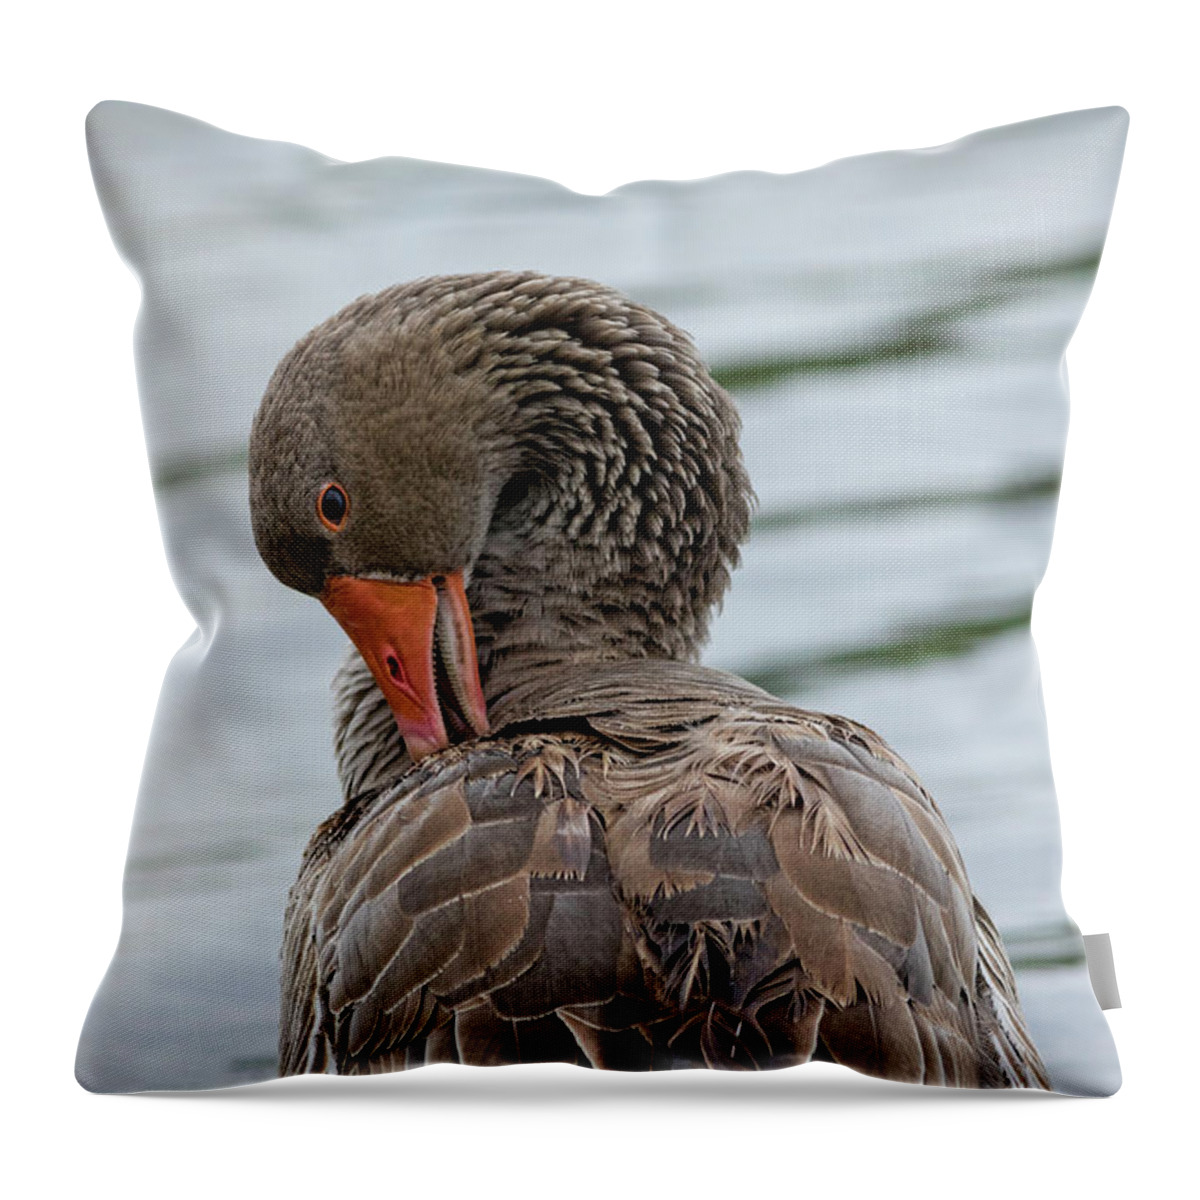 Bird Throw Pillow featuring the photograph Preening by Mark Harrington